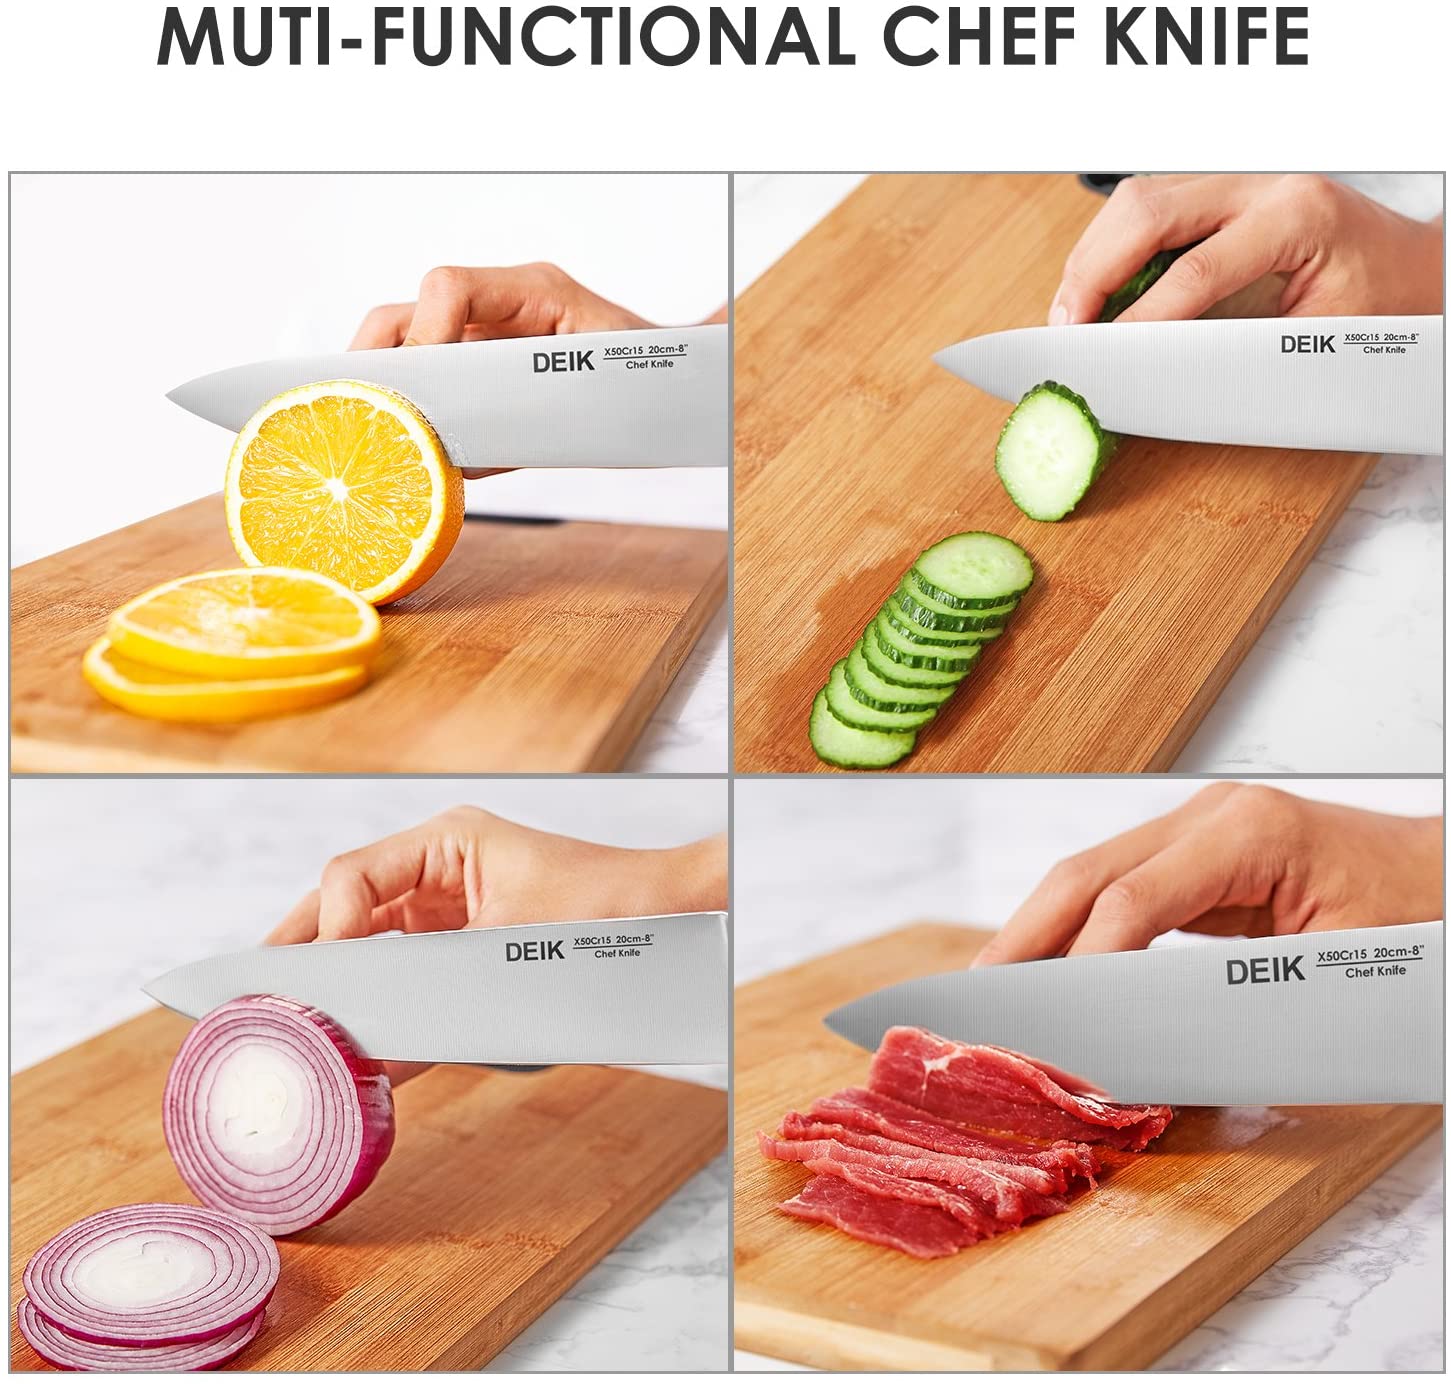 DEik Knife Set, Muti-functioanl Chef Knife, Sharpness, 2021